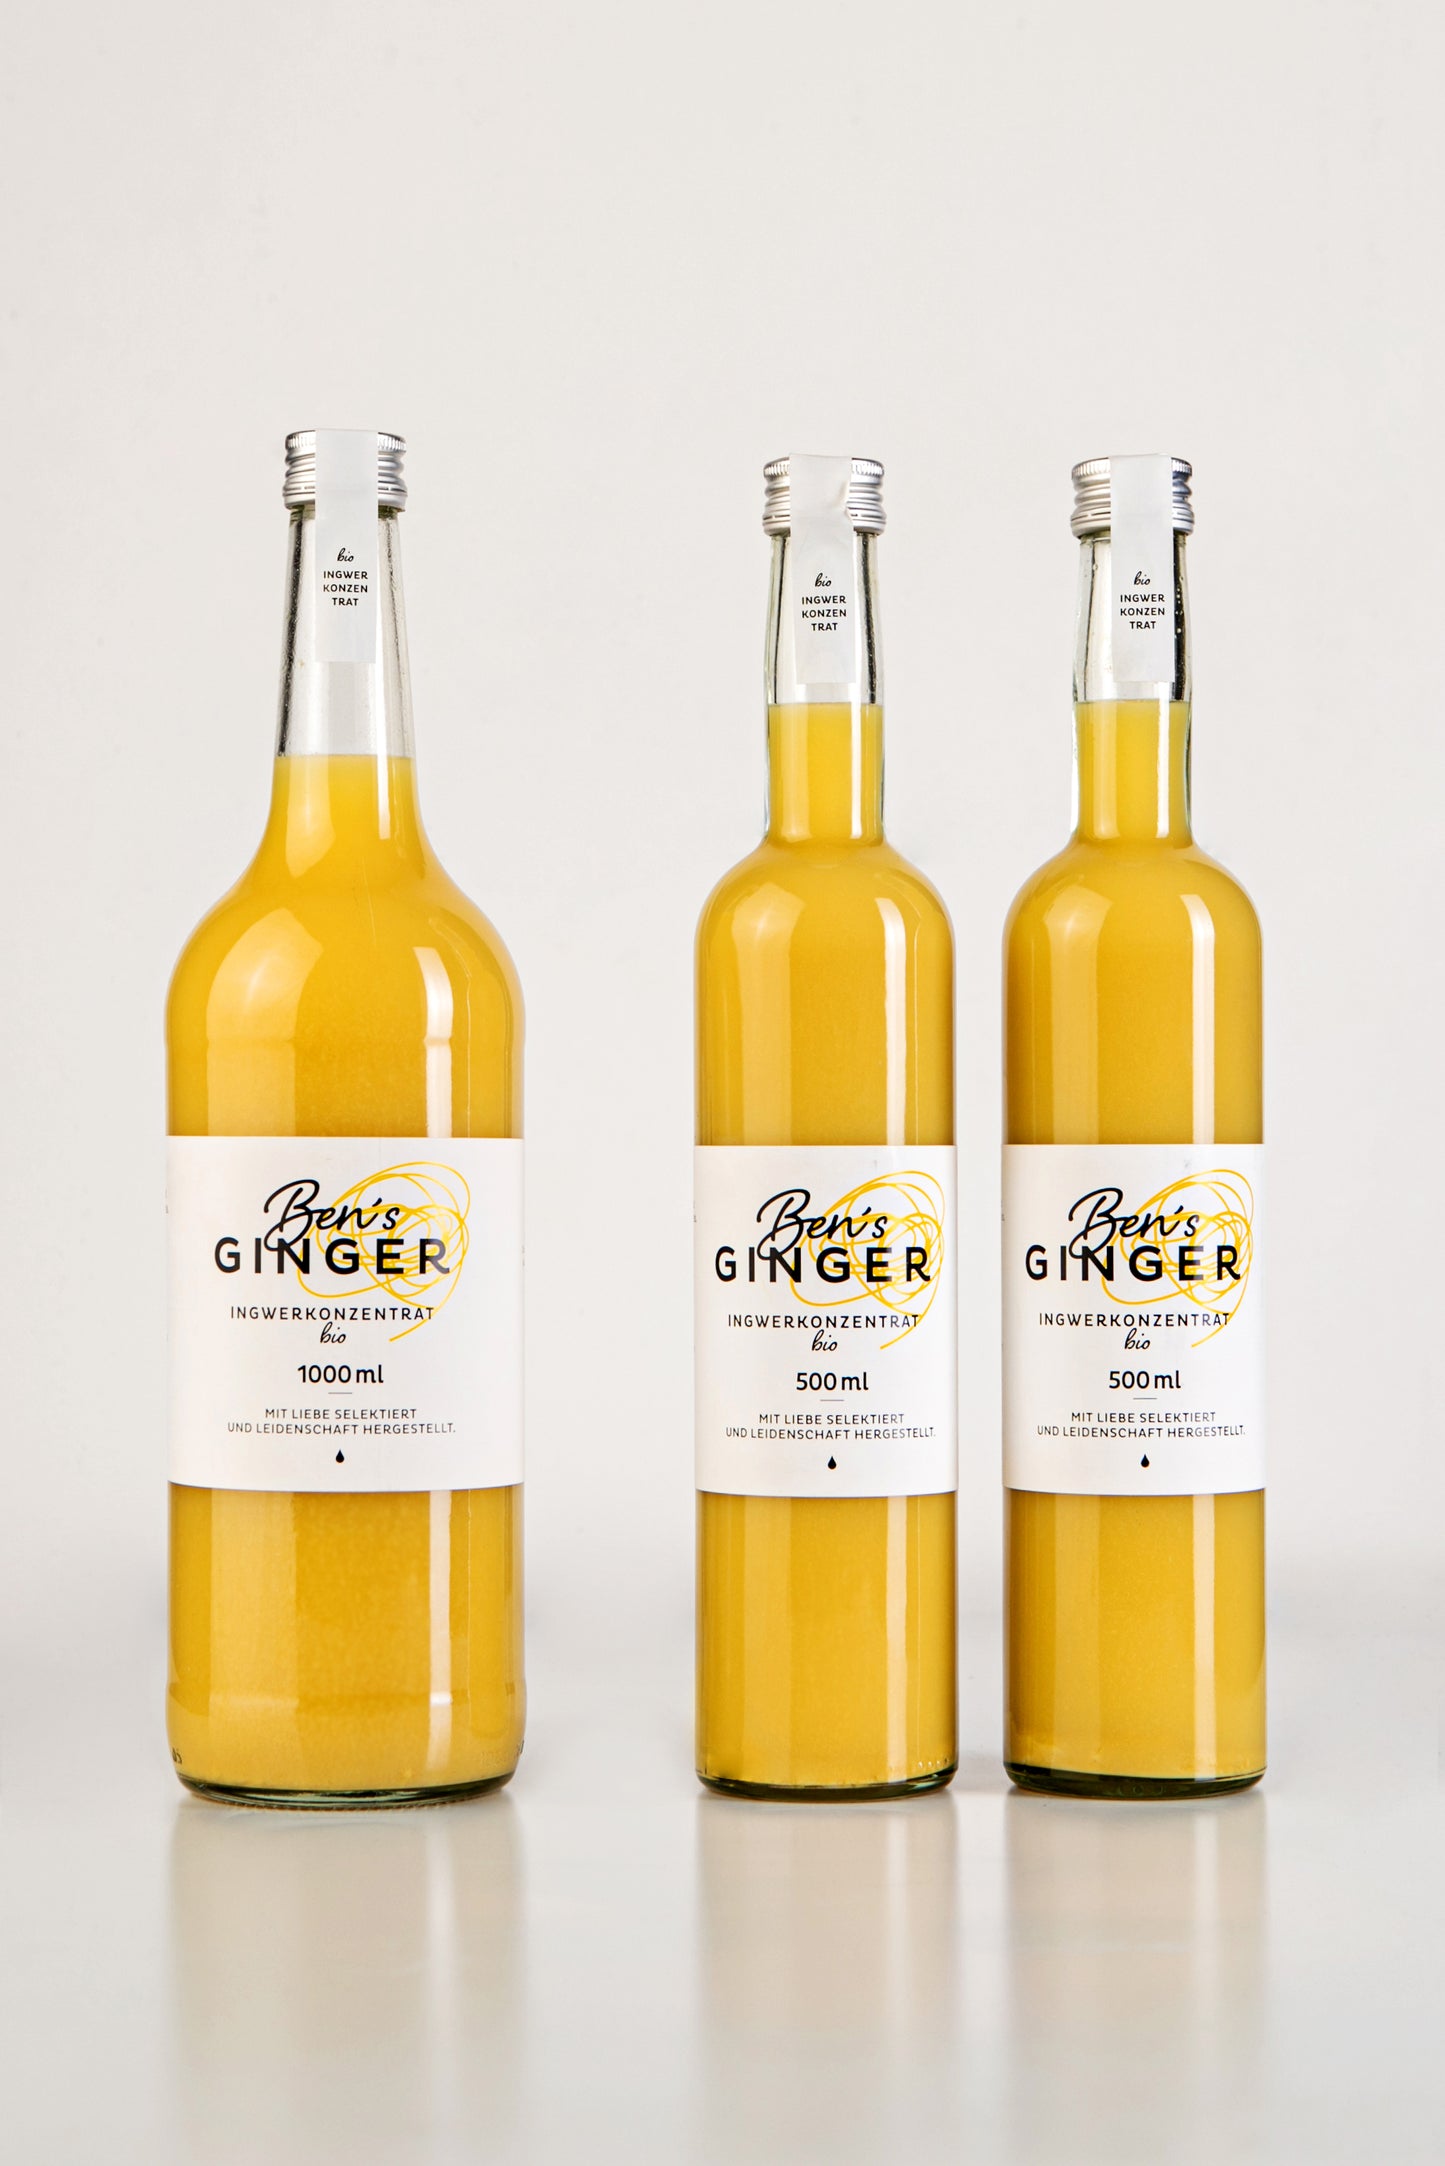 Ben's Ginger Bio Ingwerkonzentrat - Vorratspack 2x 500ml + 1x 1 Liter